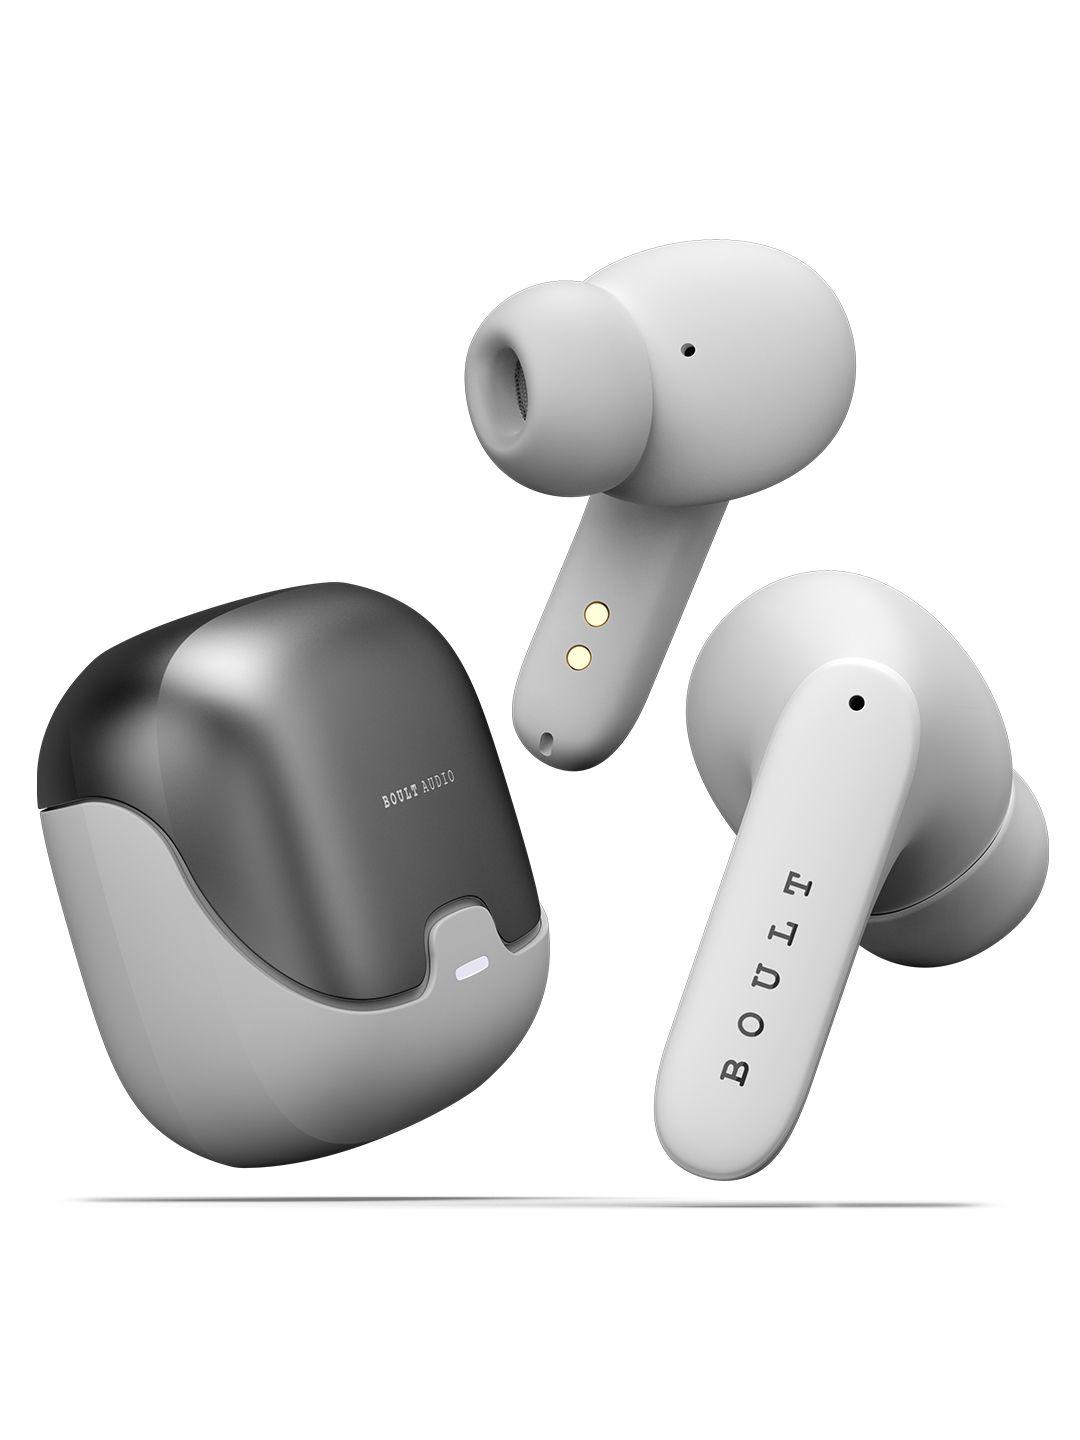 boult audio airbass z40 with zen enc mic & 60h playtime wireless earphones